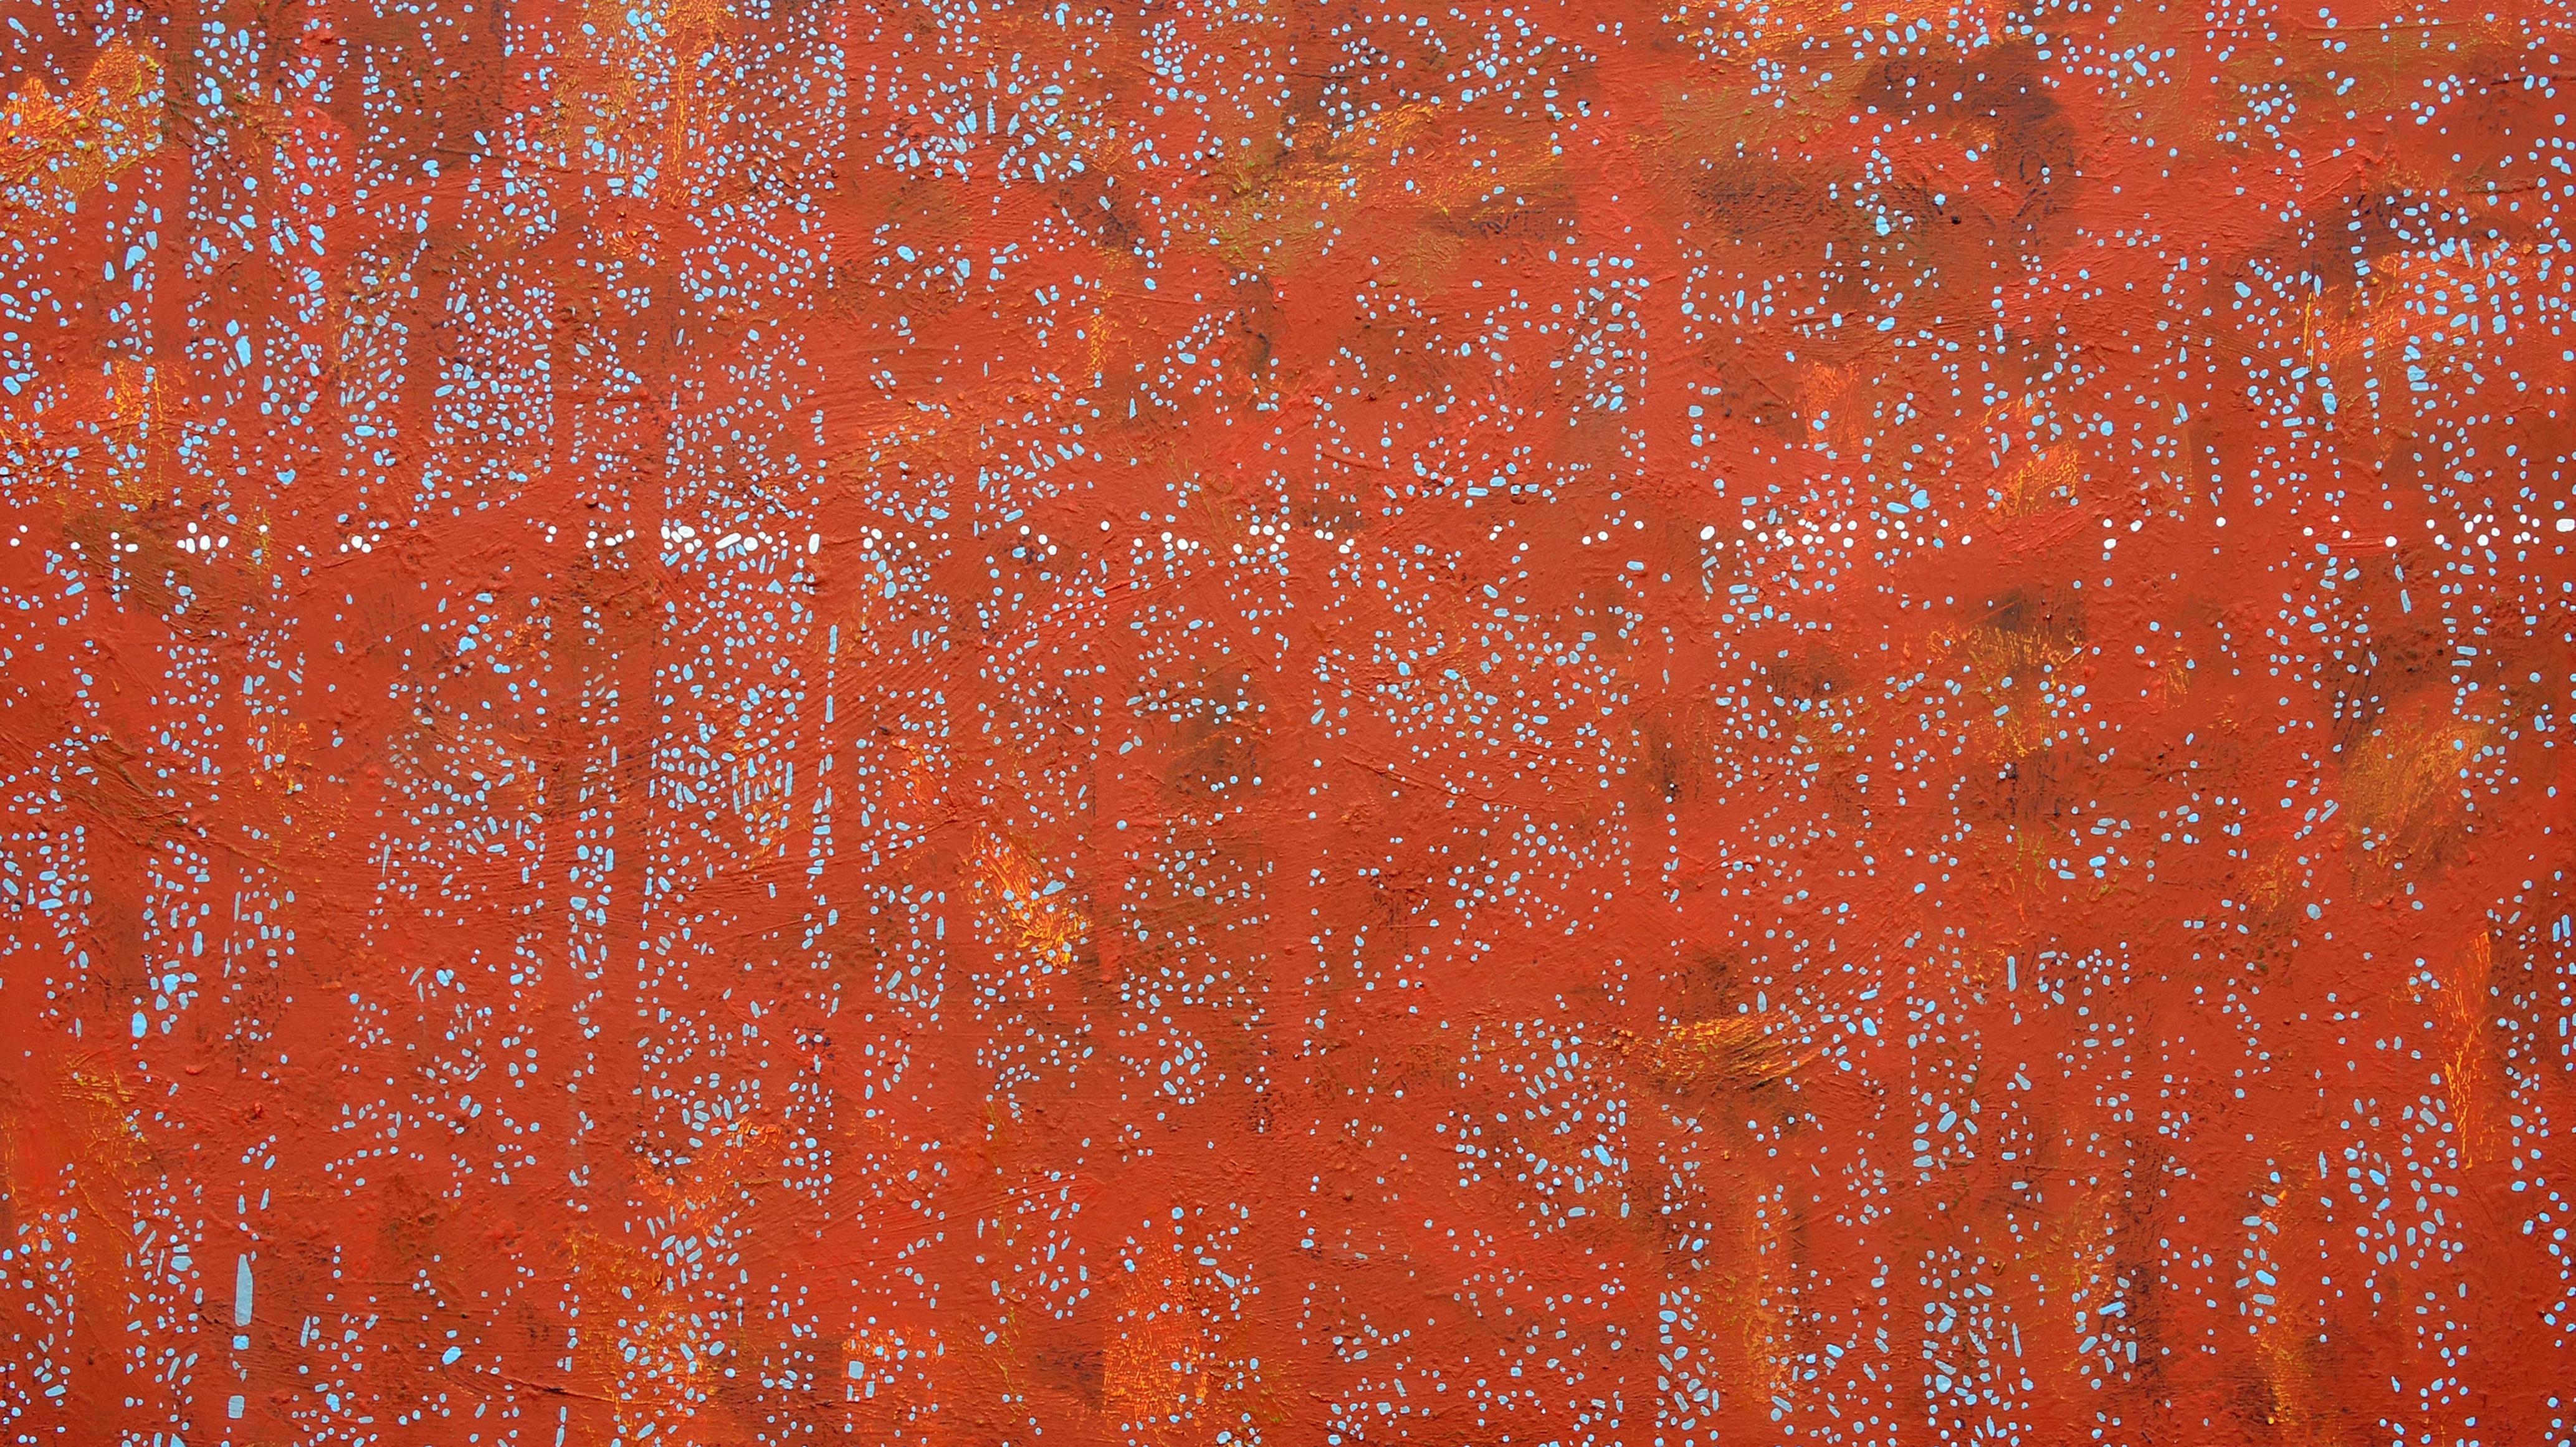 Robert Motelski Landscape Painting - Trees 19 October 11:12 - Modern Nature Painting, Landscape, Forest, Contemplativ